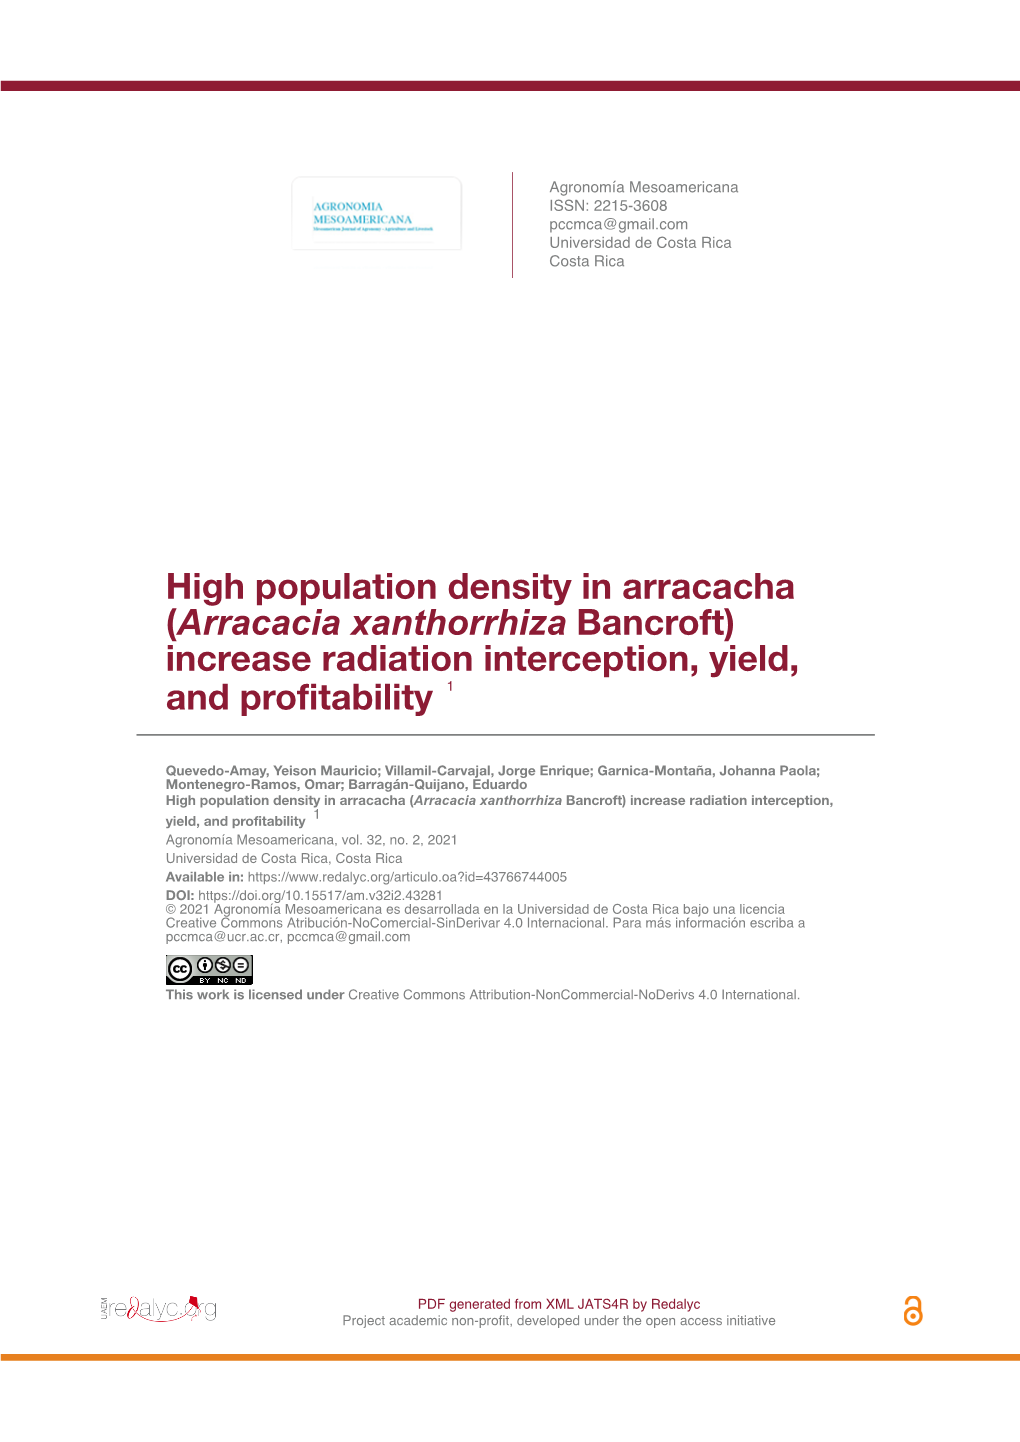 High Population Density in Arracacha (Arracacia Xanthorrhiza Bancroft) Increase Radiation Interception, Yield, and Profitability 1